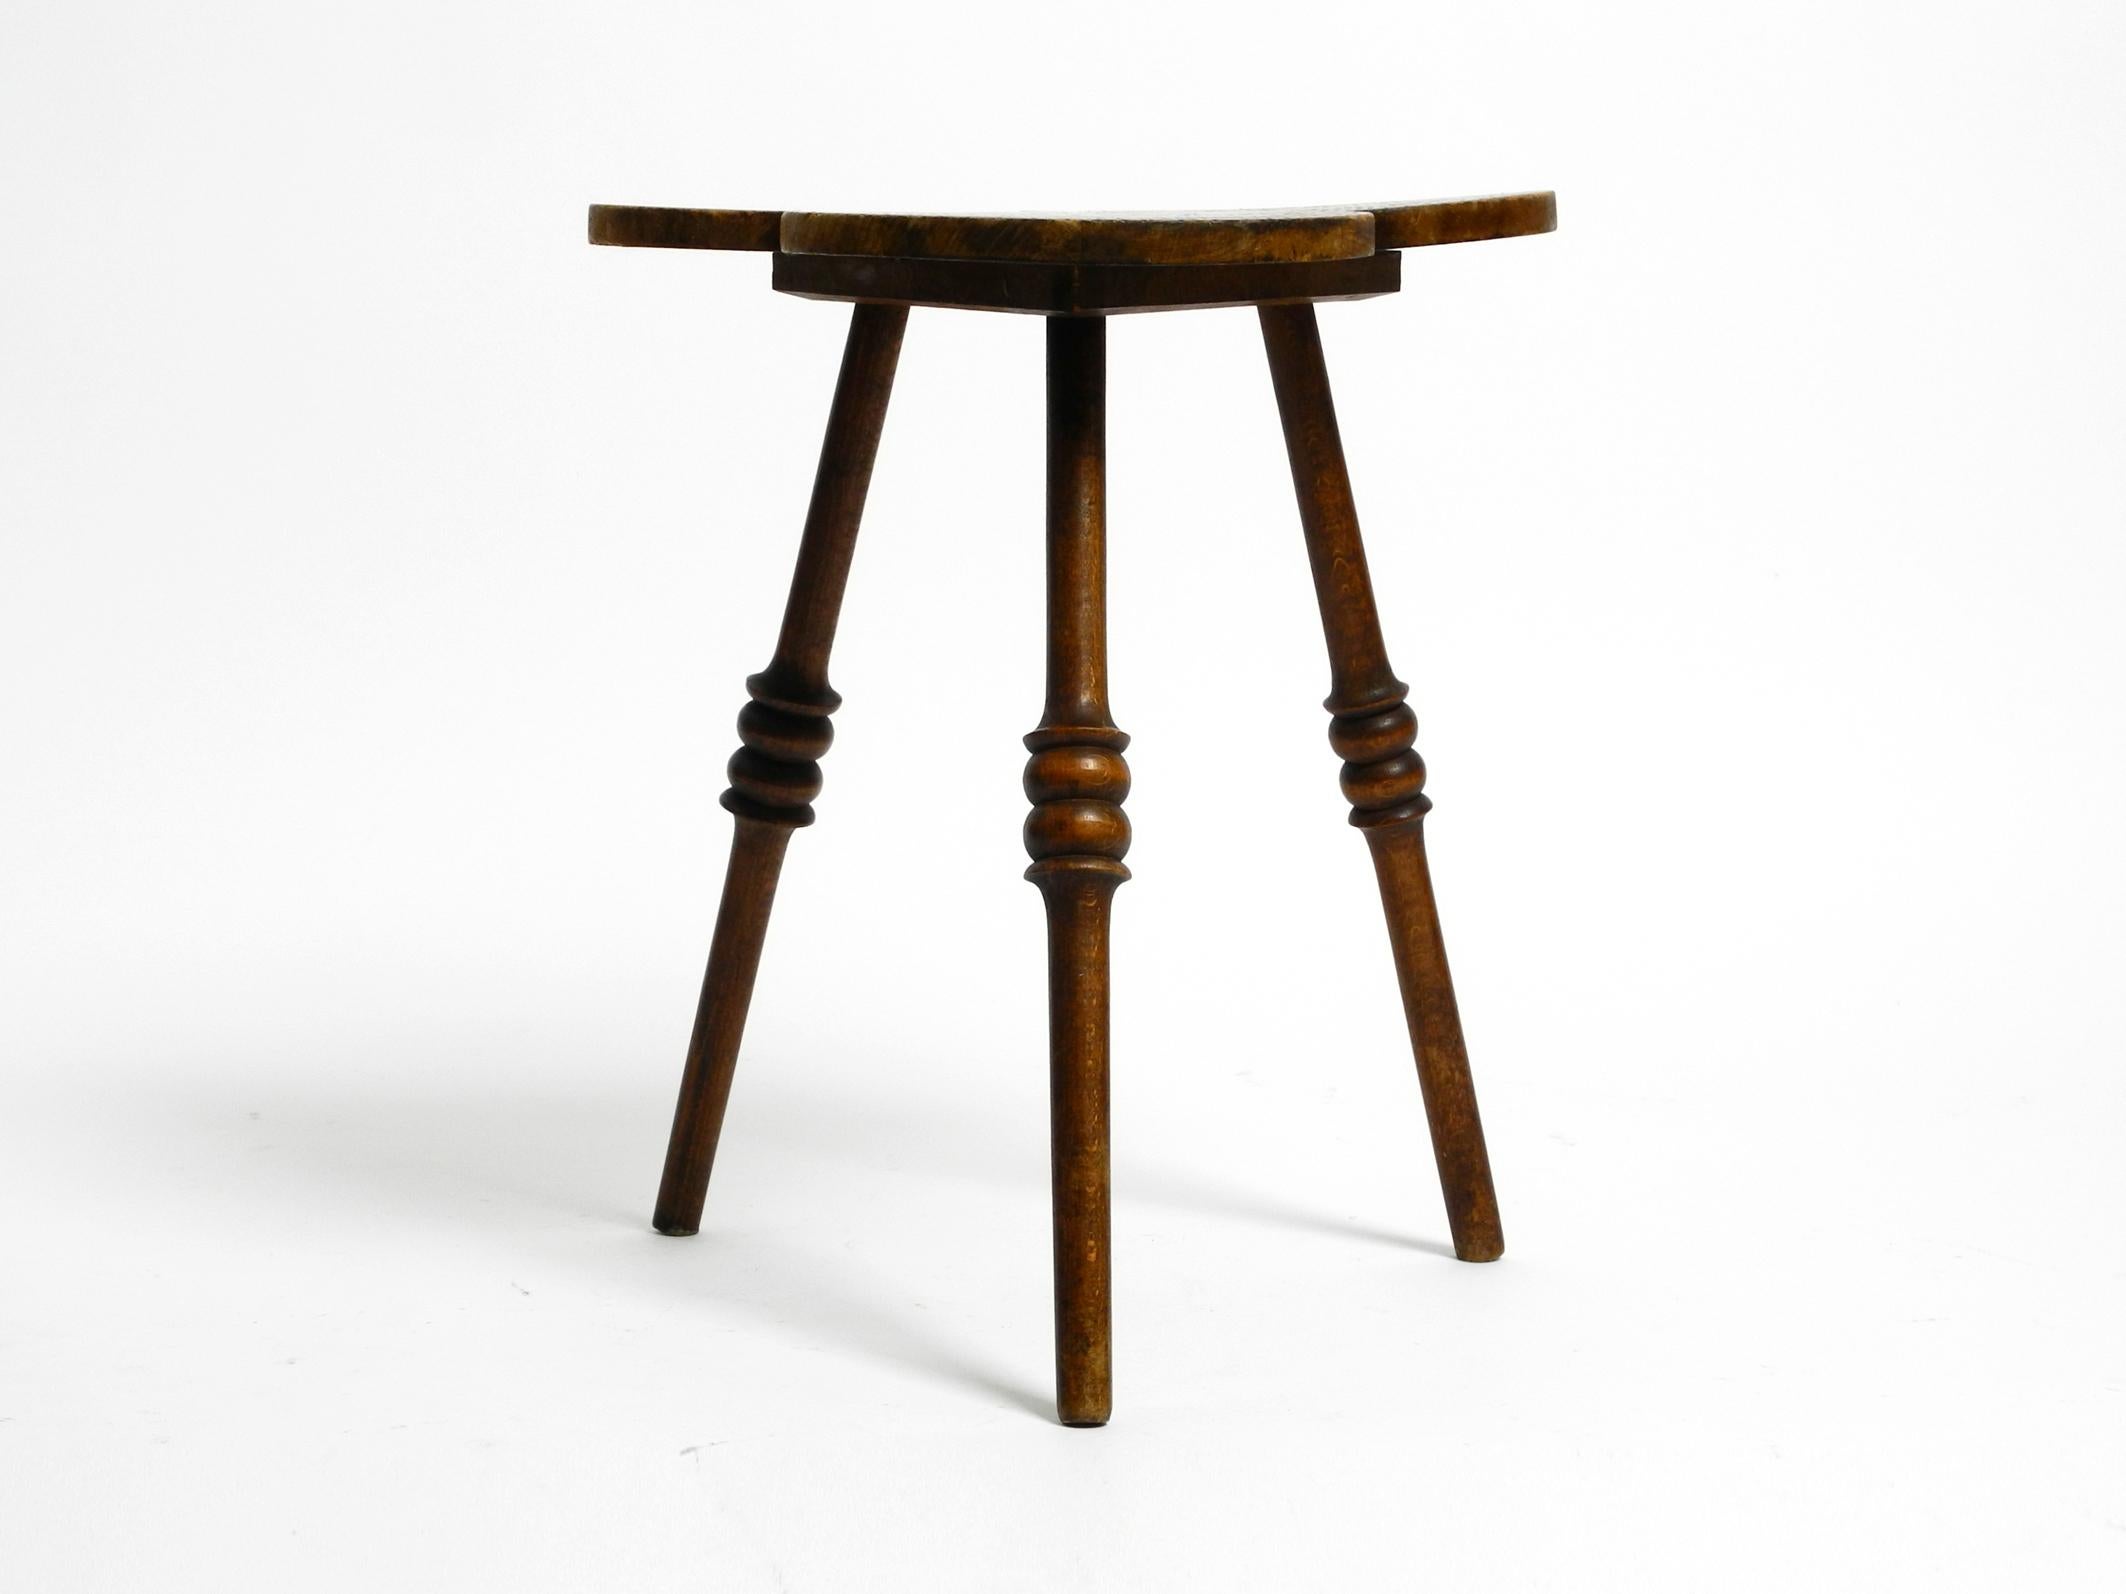 Art Nouveau Beautiful small 1920s three-legged trefoil side table made of walnut